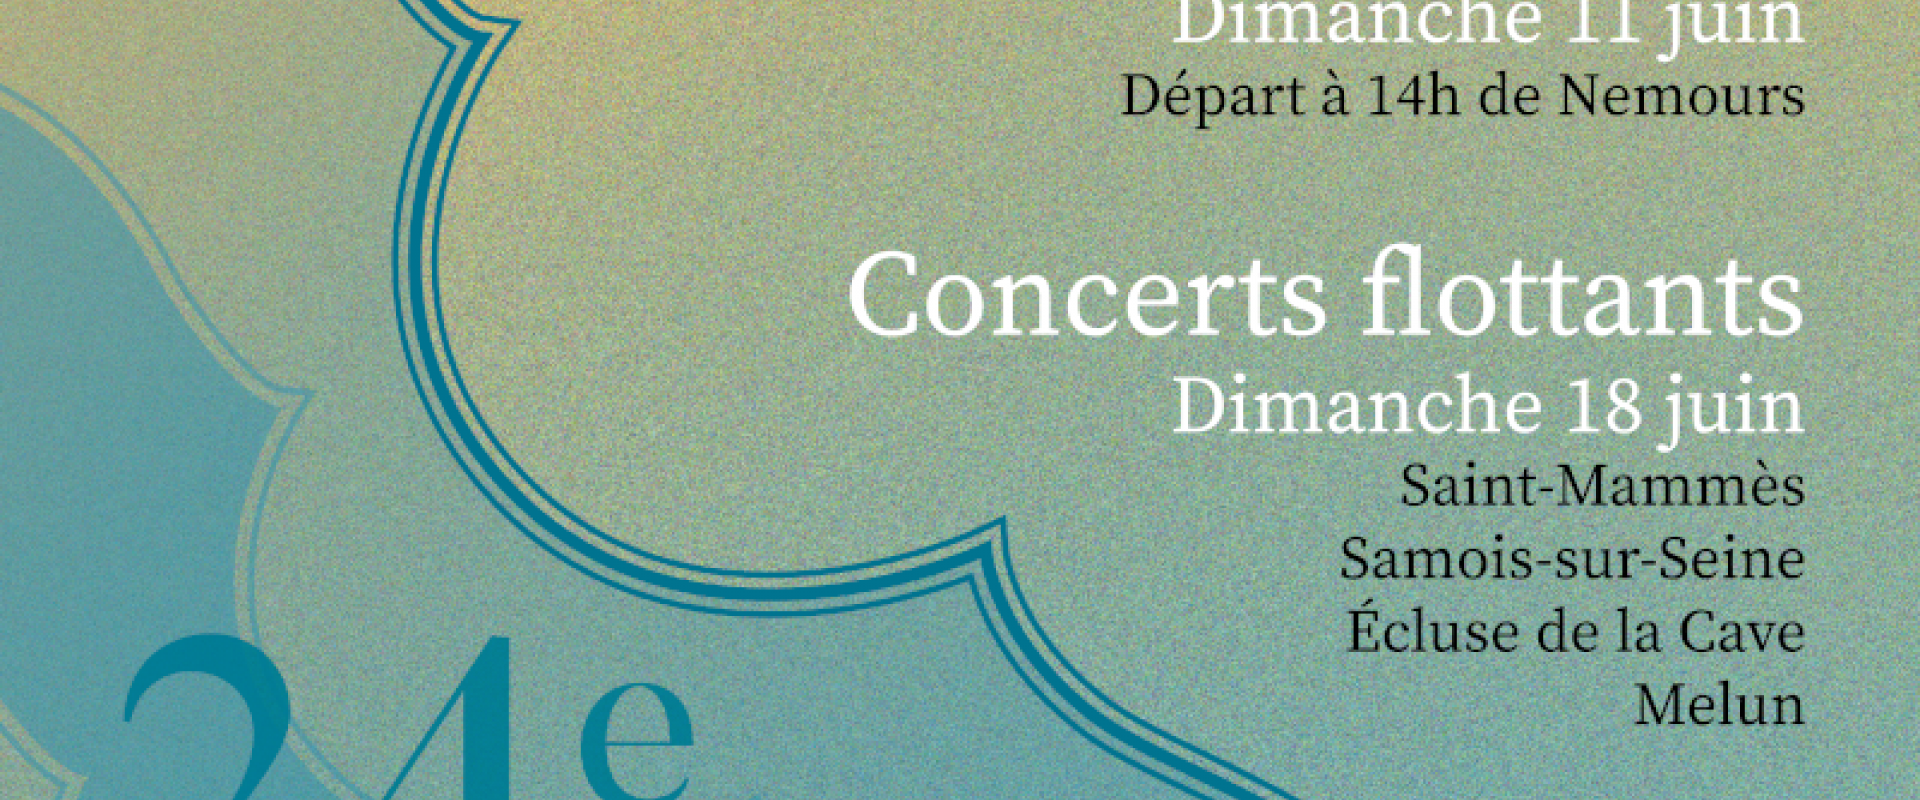 24ème rencontres musicales en Seine-et-Marne